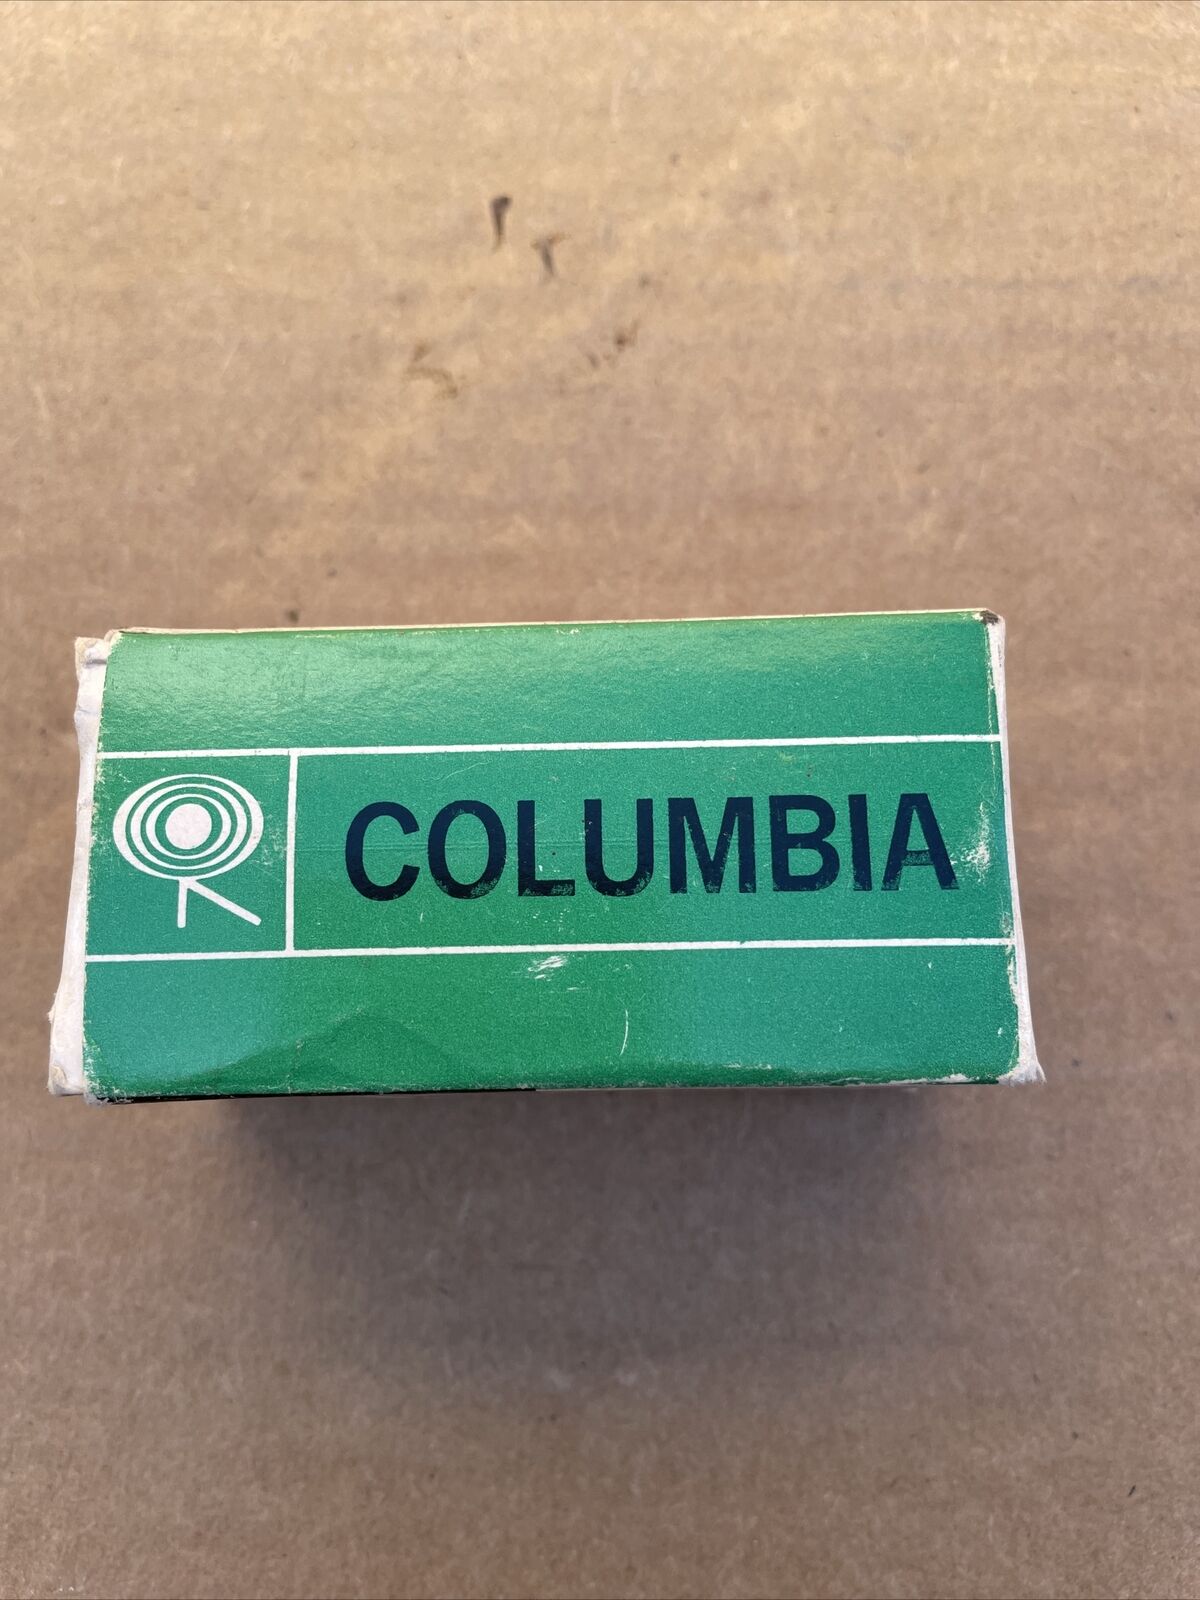 Vintage COLUMBIA Garrard Spindle Type LRS-20. Original Box